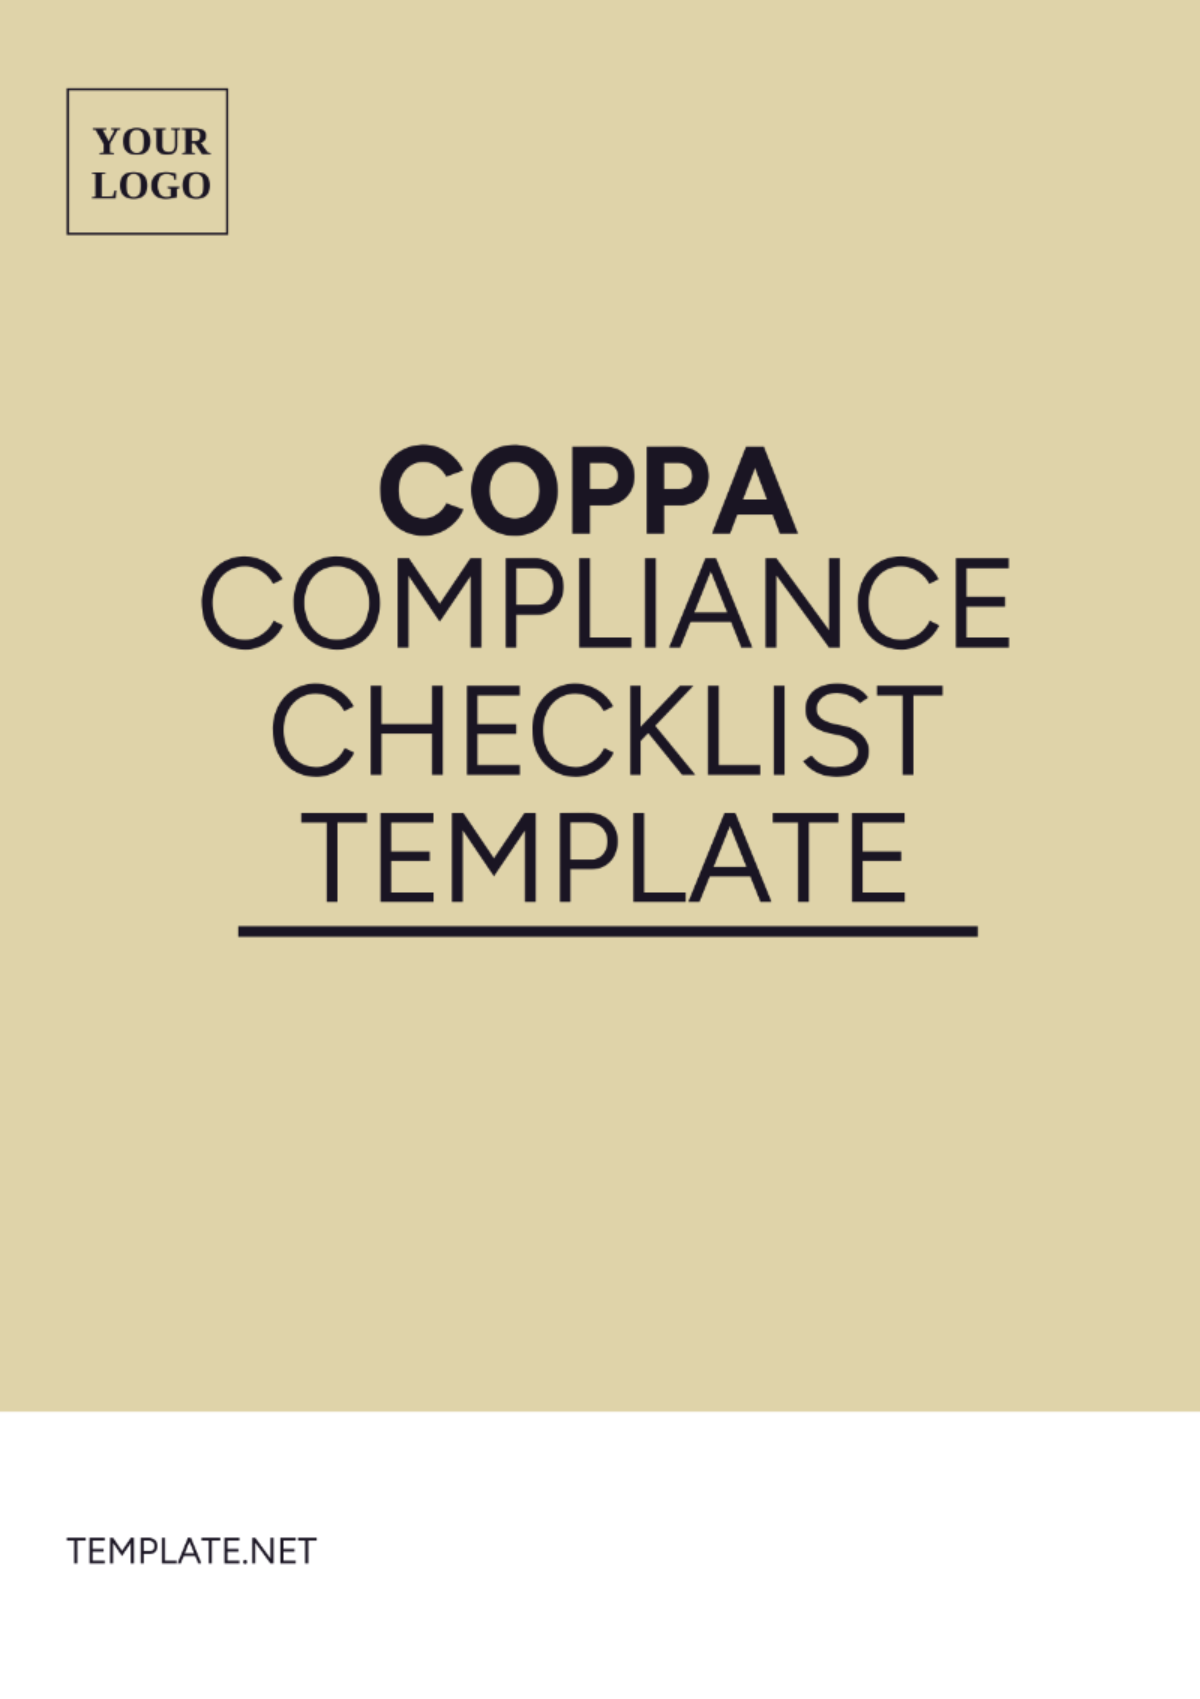 Free Digital Marketing Agency Coppa Compliance Statement Template